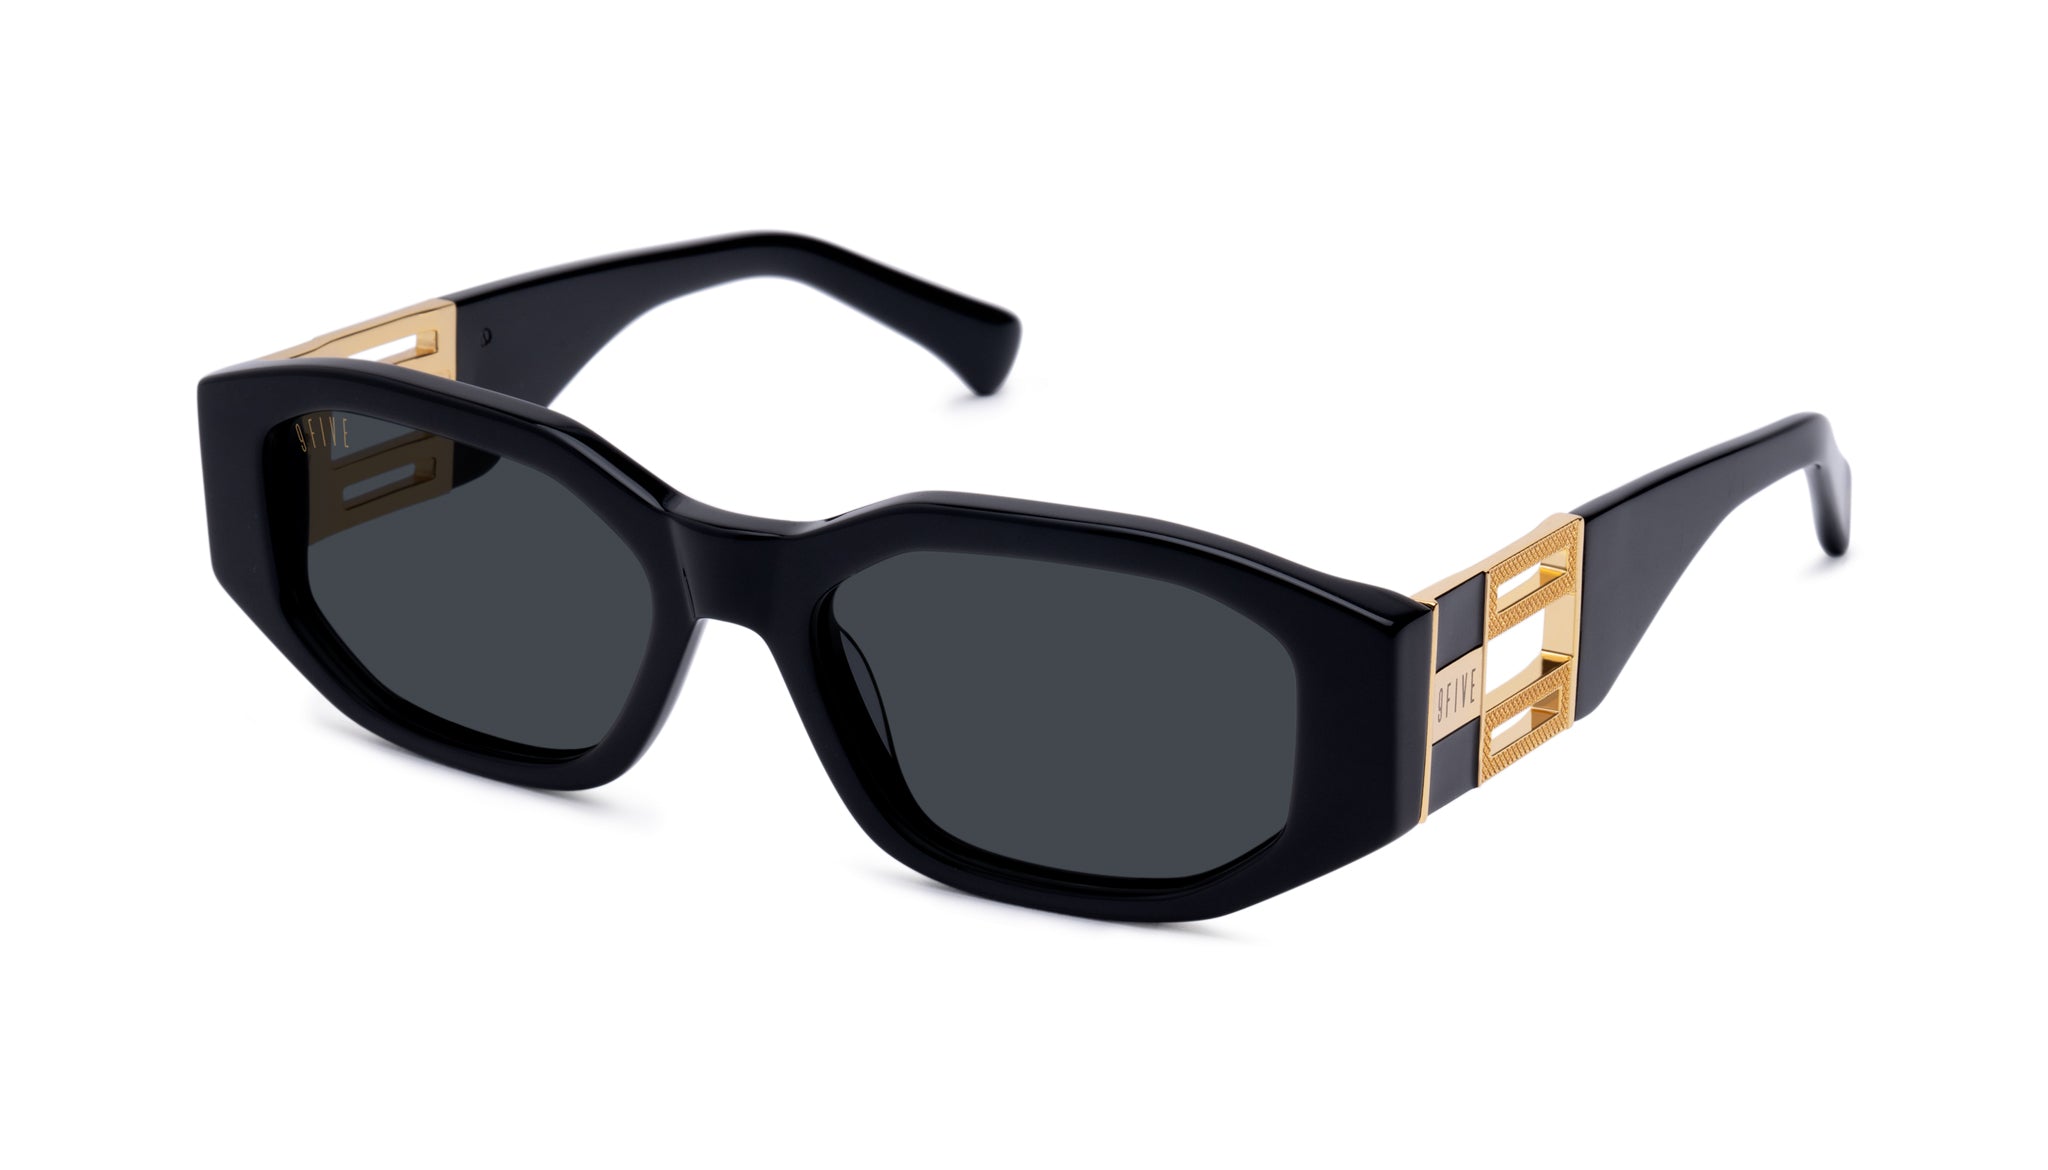 9Five Levels Black & 24K Gold Sunglasses Black